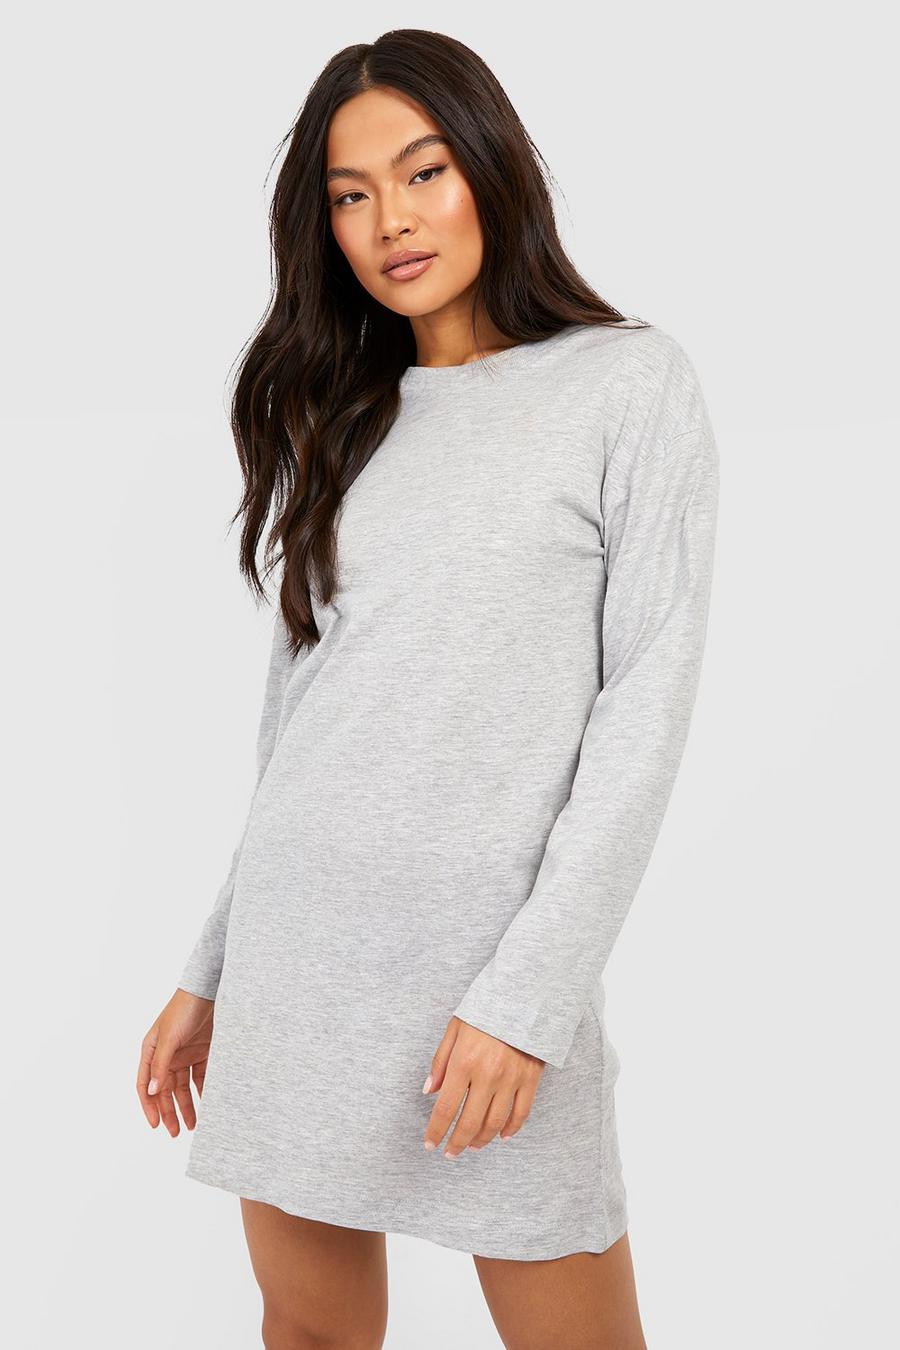 Grey marl Basic Long Sleeve T-shirt Dress